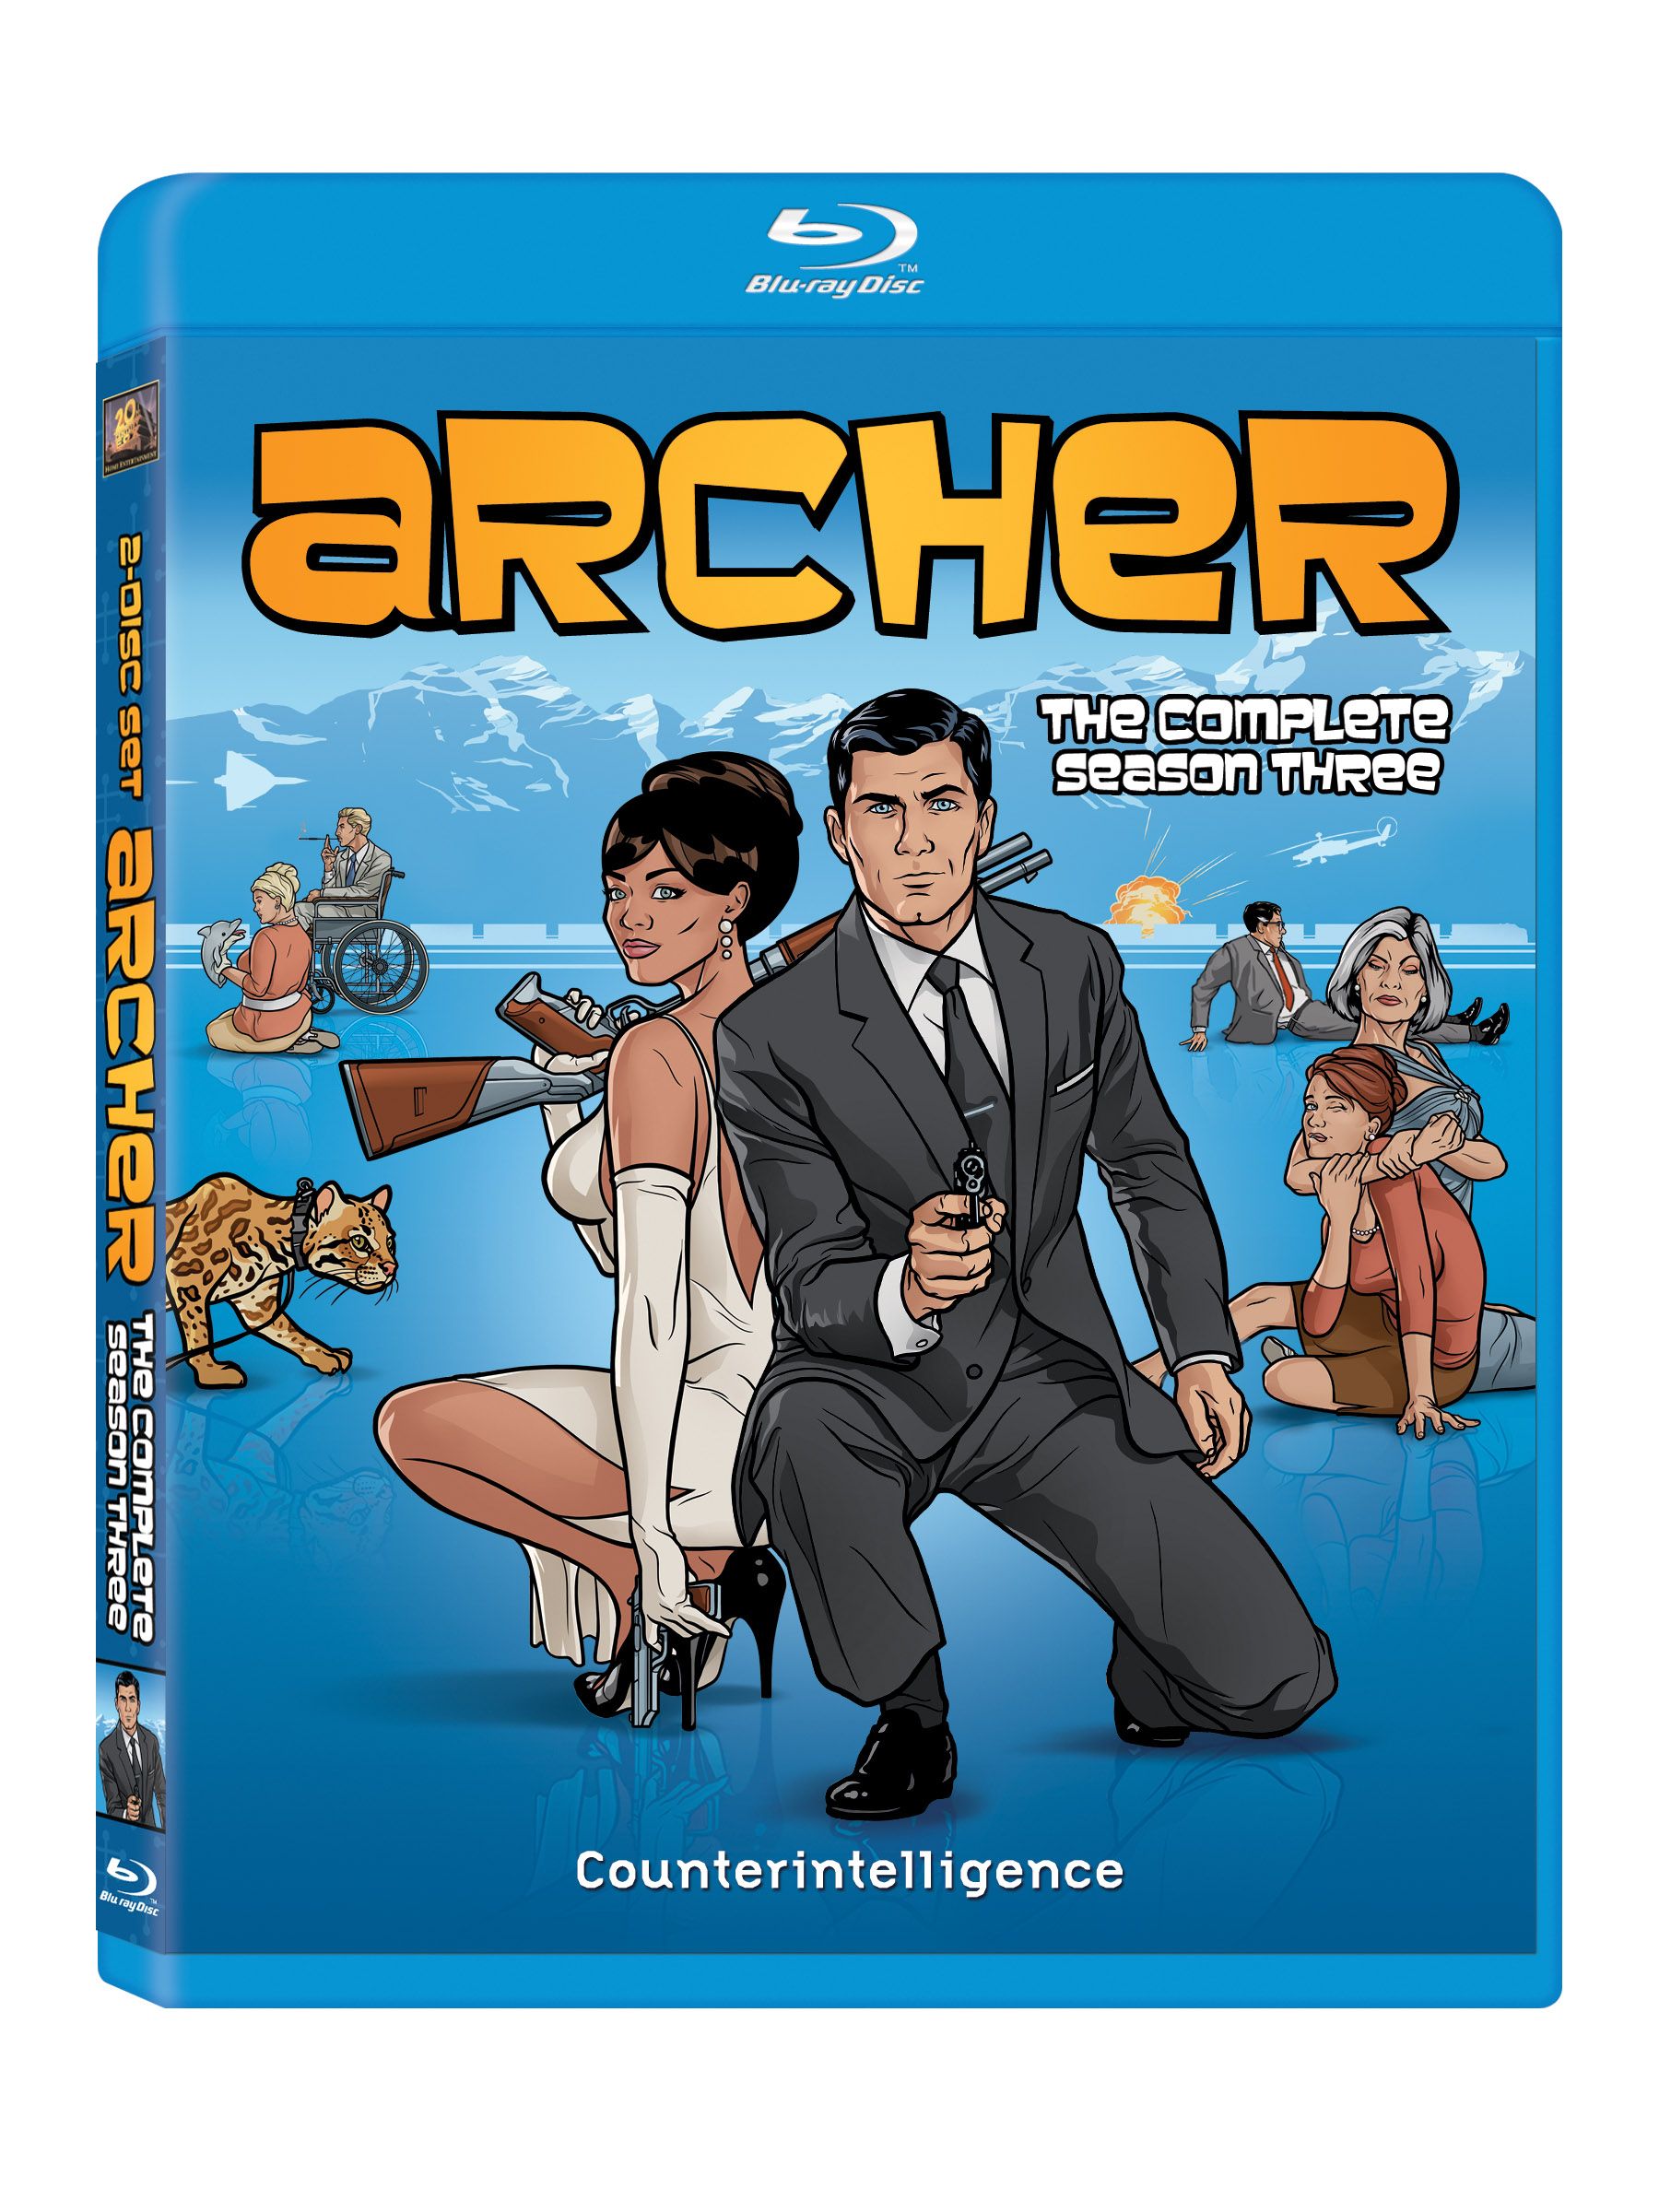 ARCHER LIVE! Event Recap and ARCHER Season 4 Preview | Collider